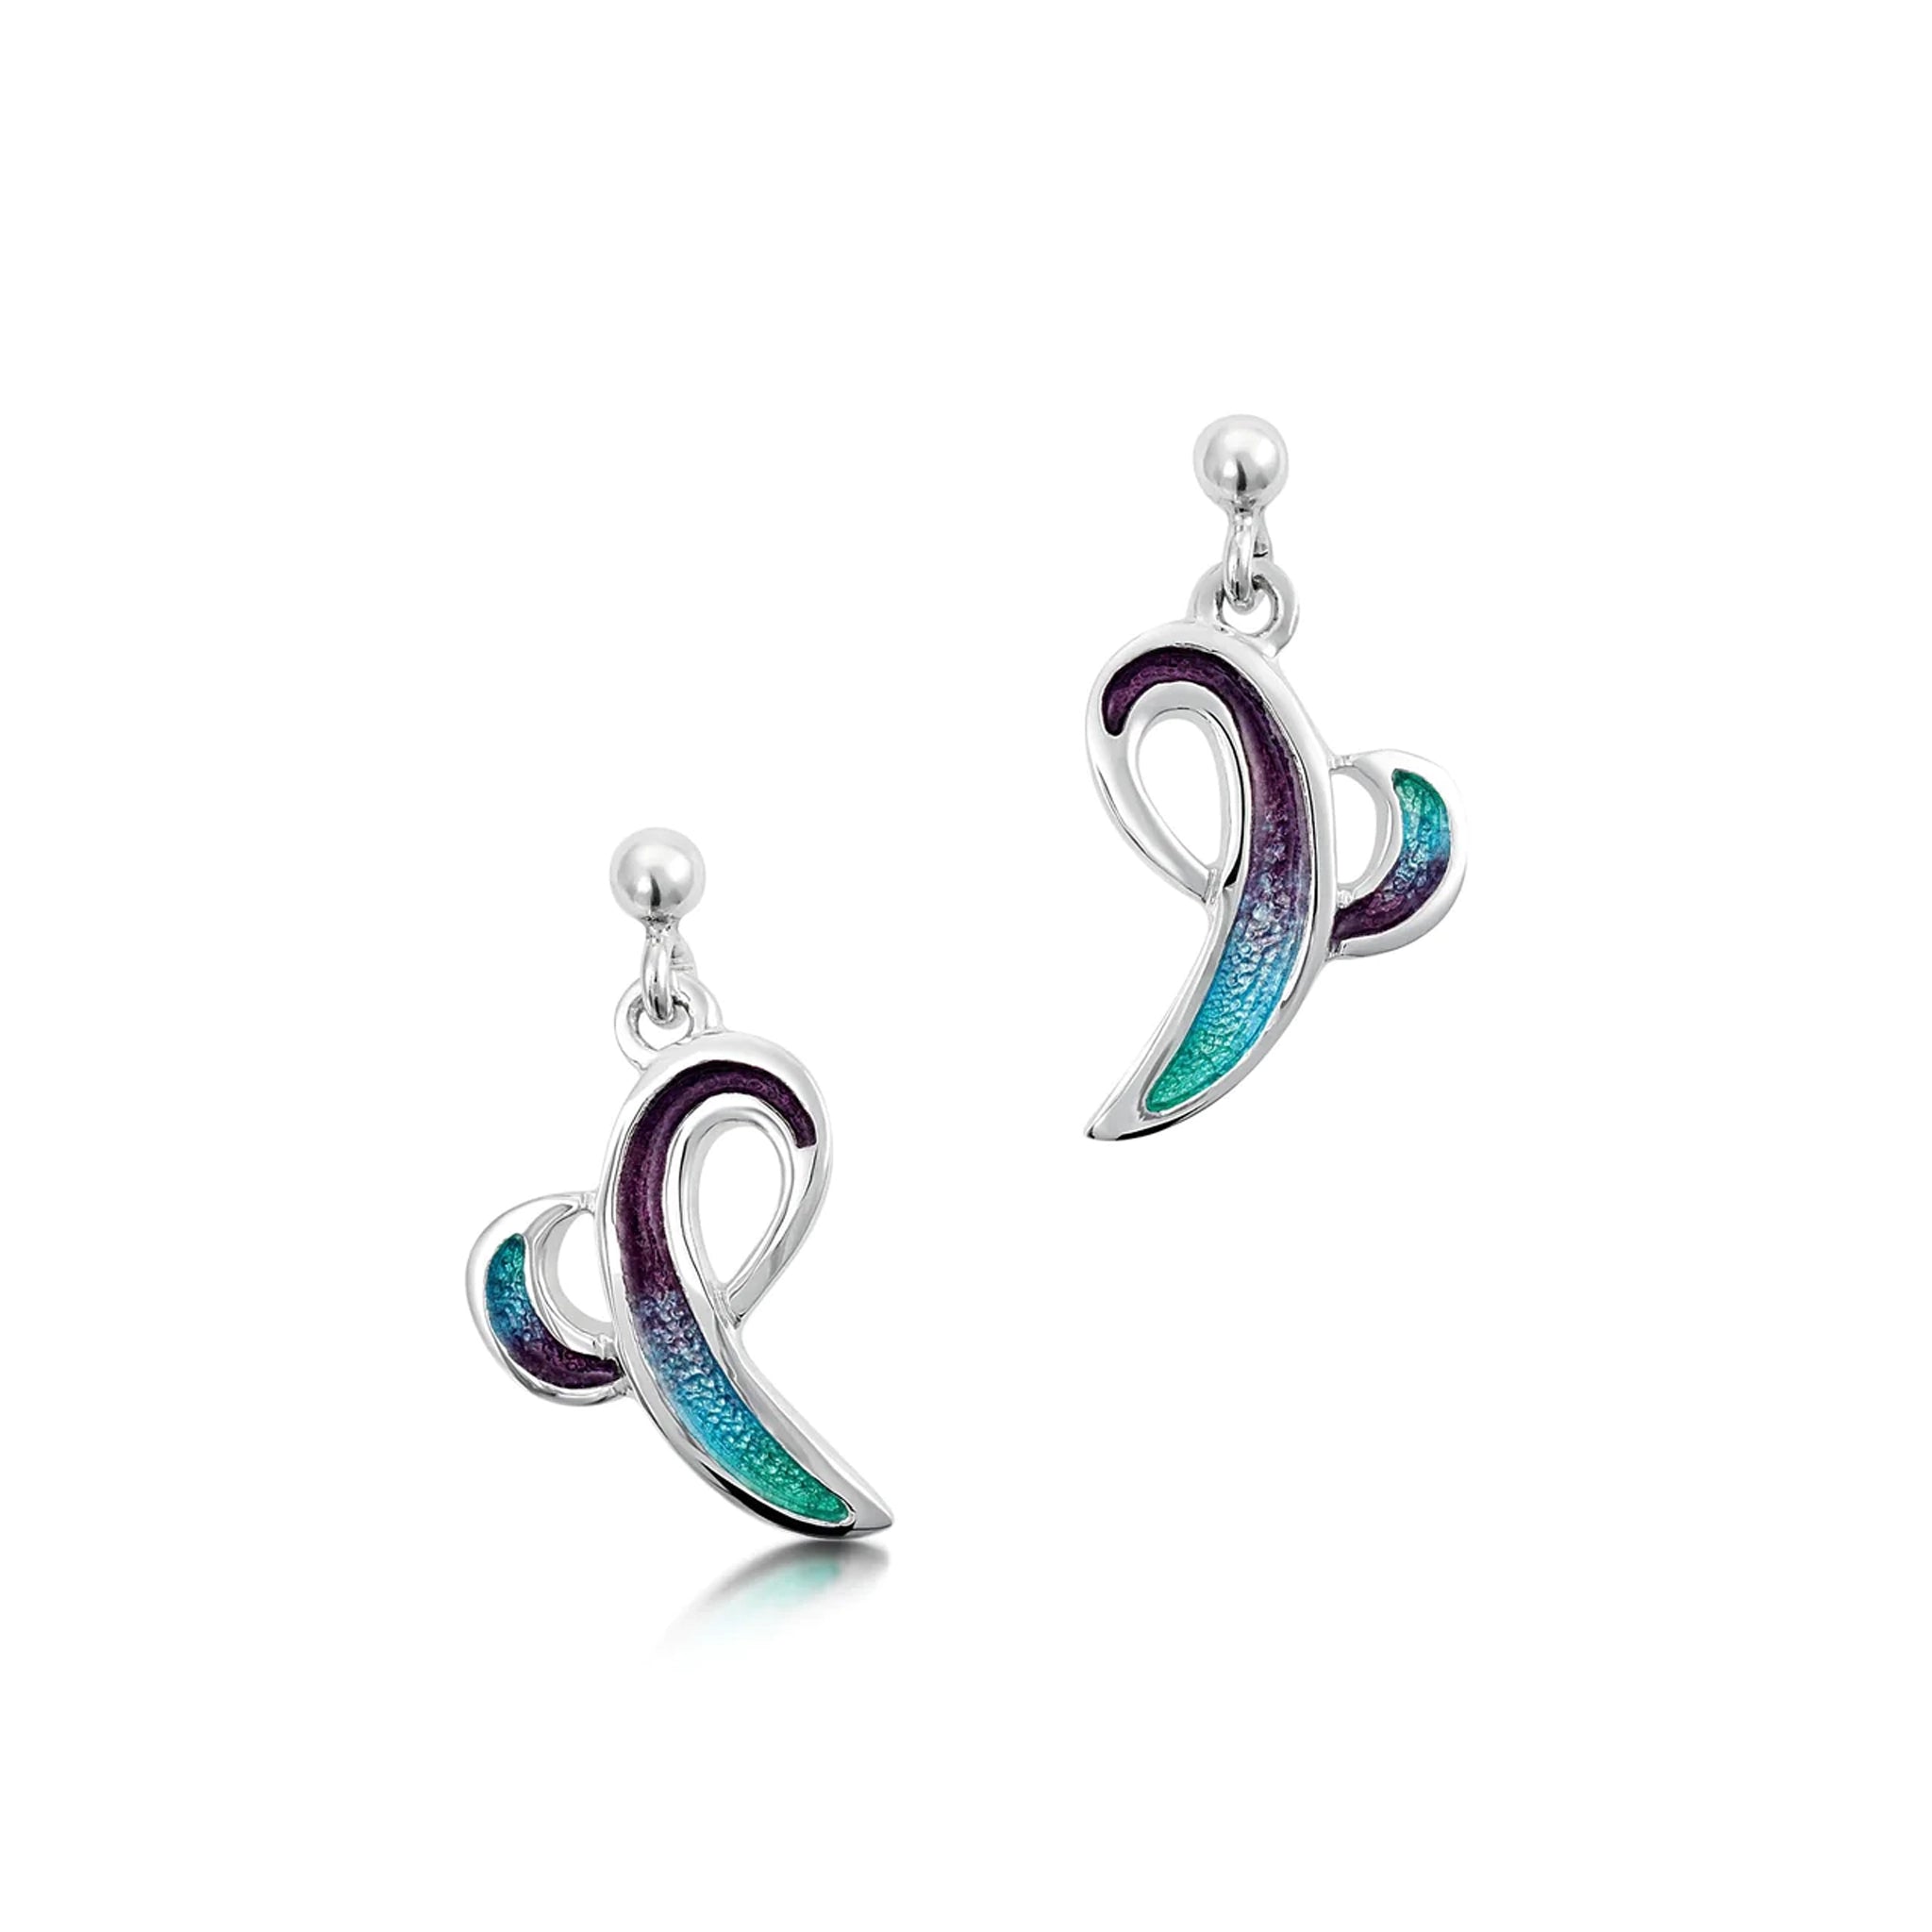 Silver earrings in an abstract ocean wave design and dark & light blue enamel, on stud fittings